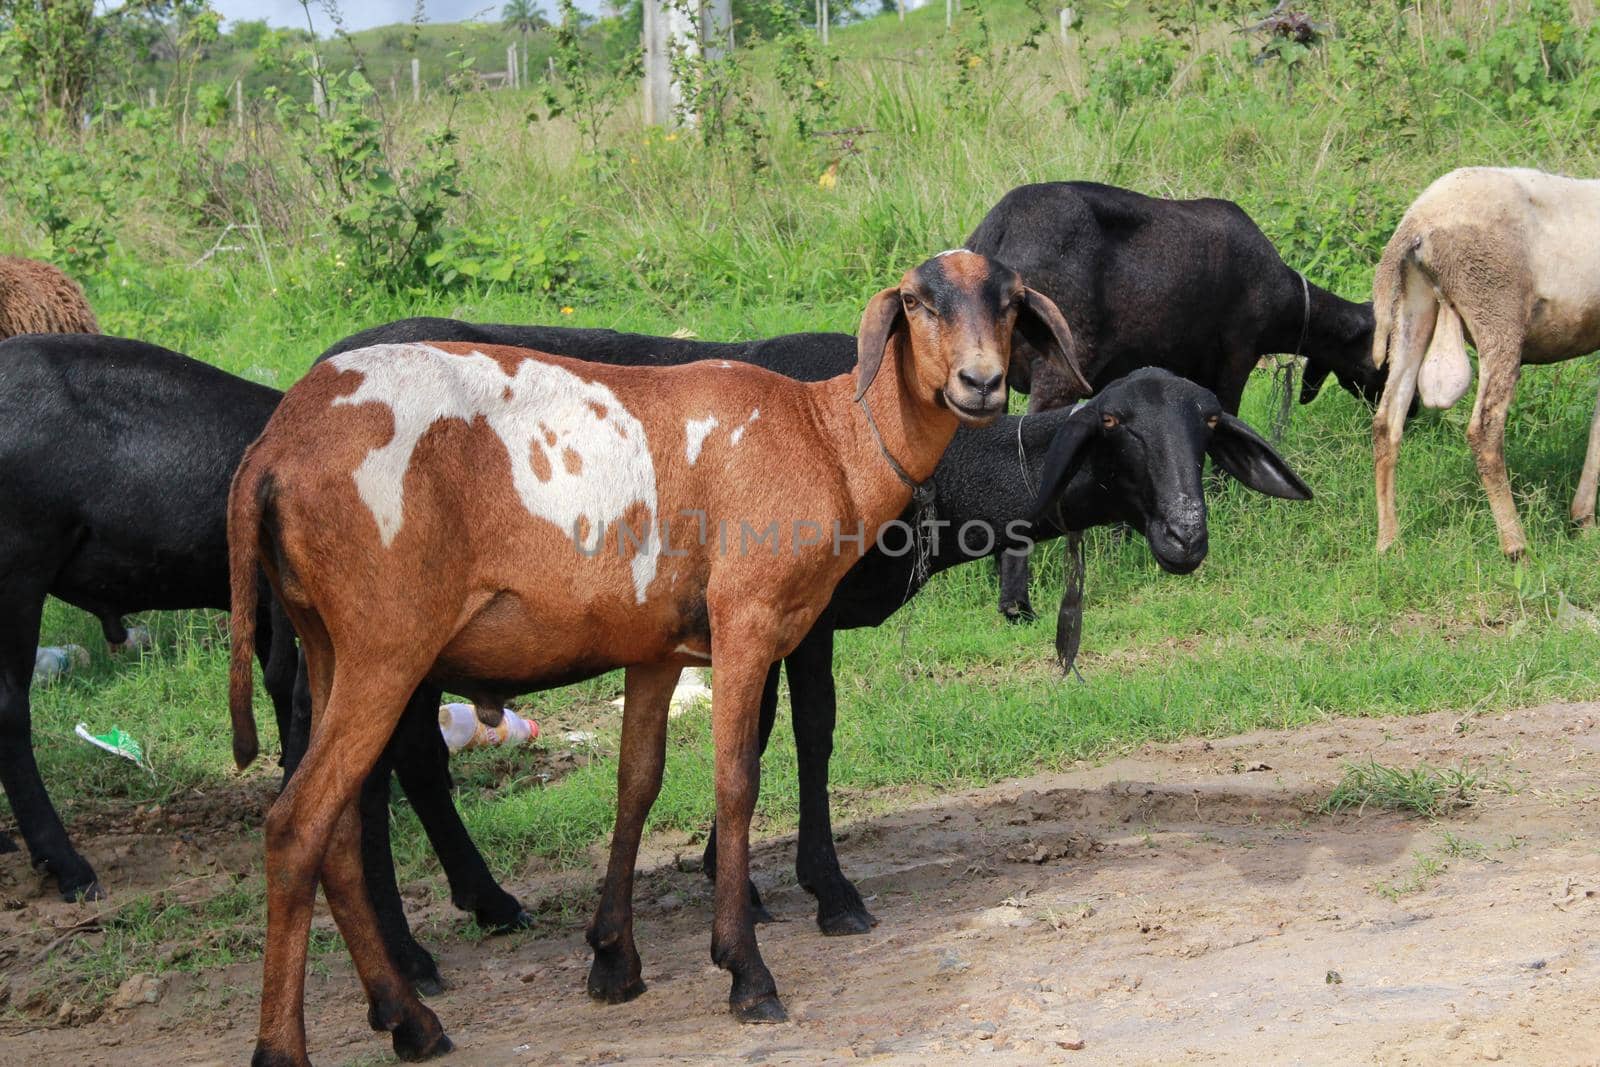 itabuna, bahia / brazil - june 15, 2012: sheep breeding on a farm in the city of Itabuna.